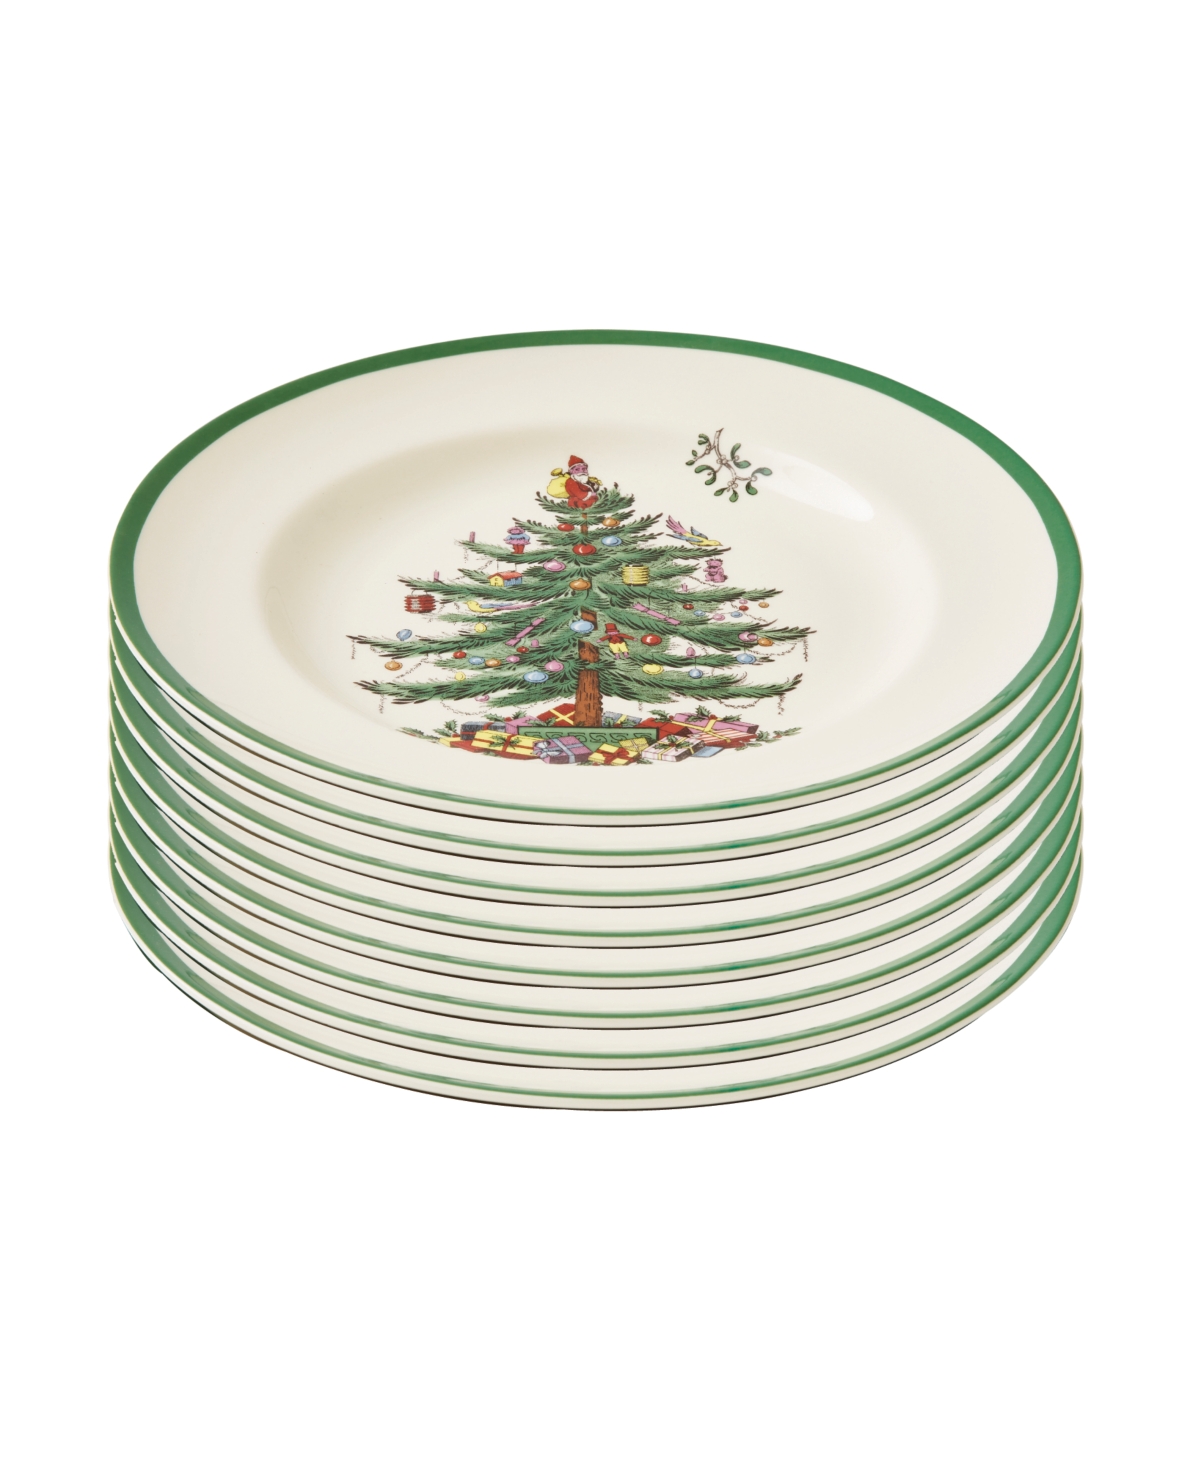 Christmas Tree Dinner Plate Set of 8 - Green